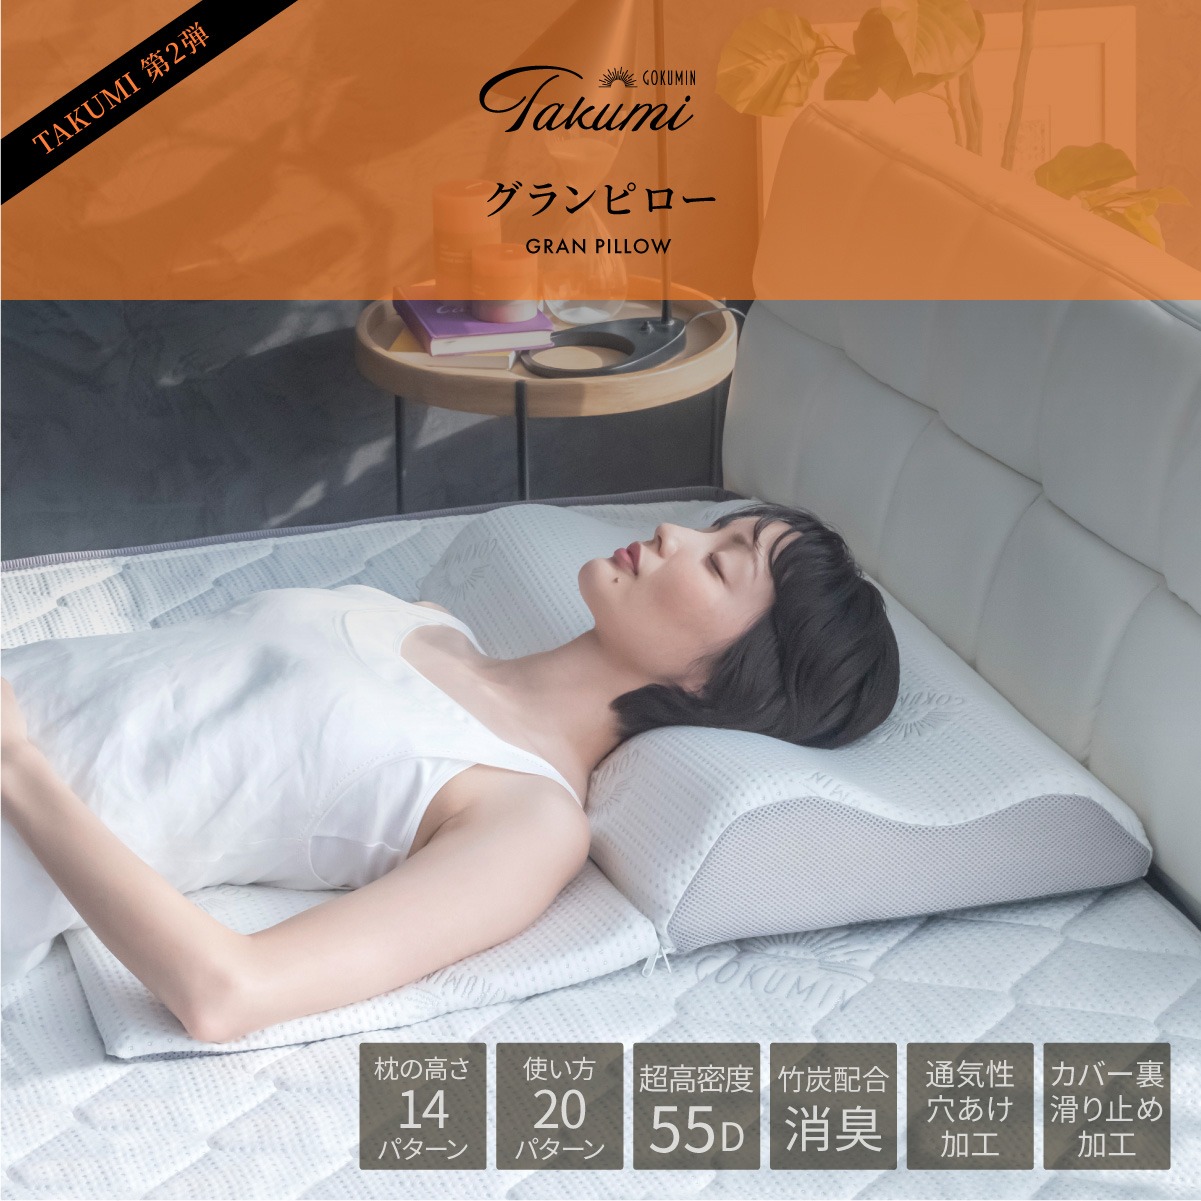 GOKUMIN Takumi 枕 グランピロー 低反発枕 20パターンの寝心地 まくら 